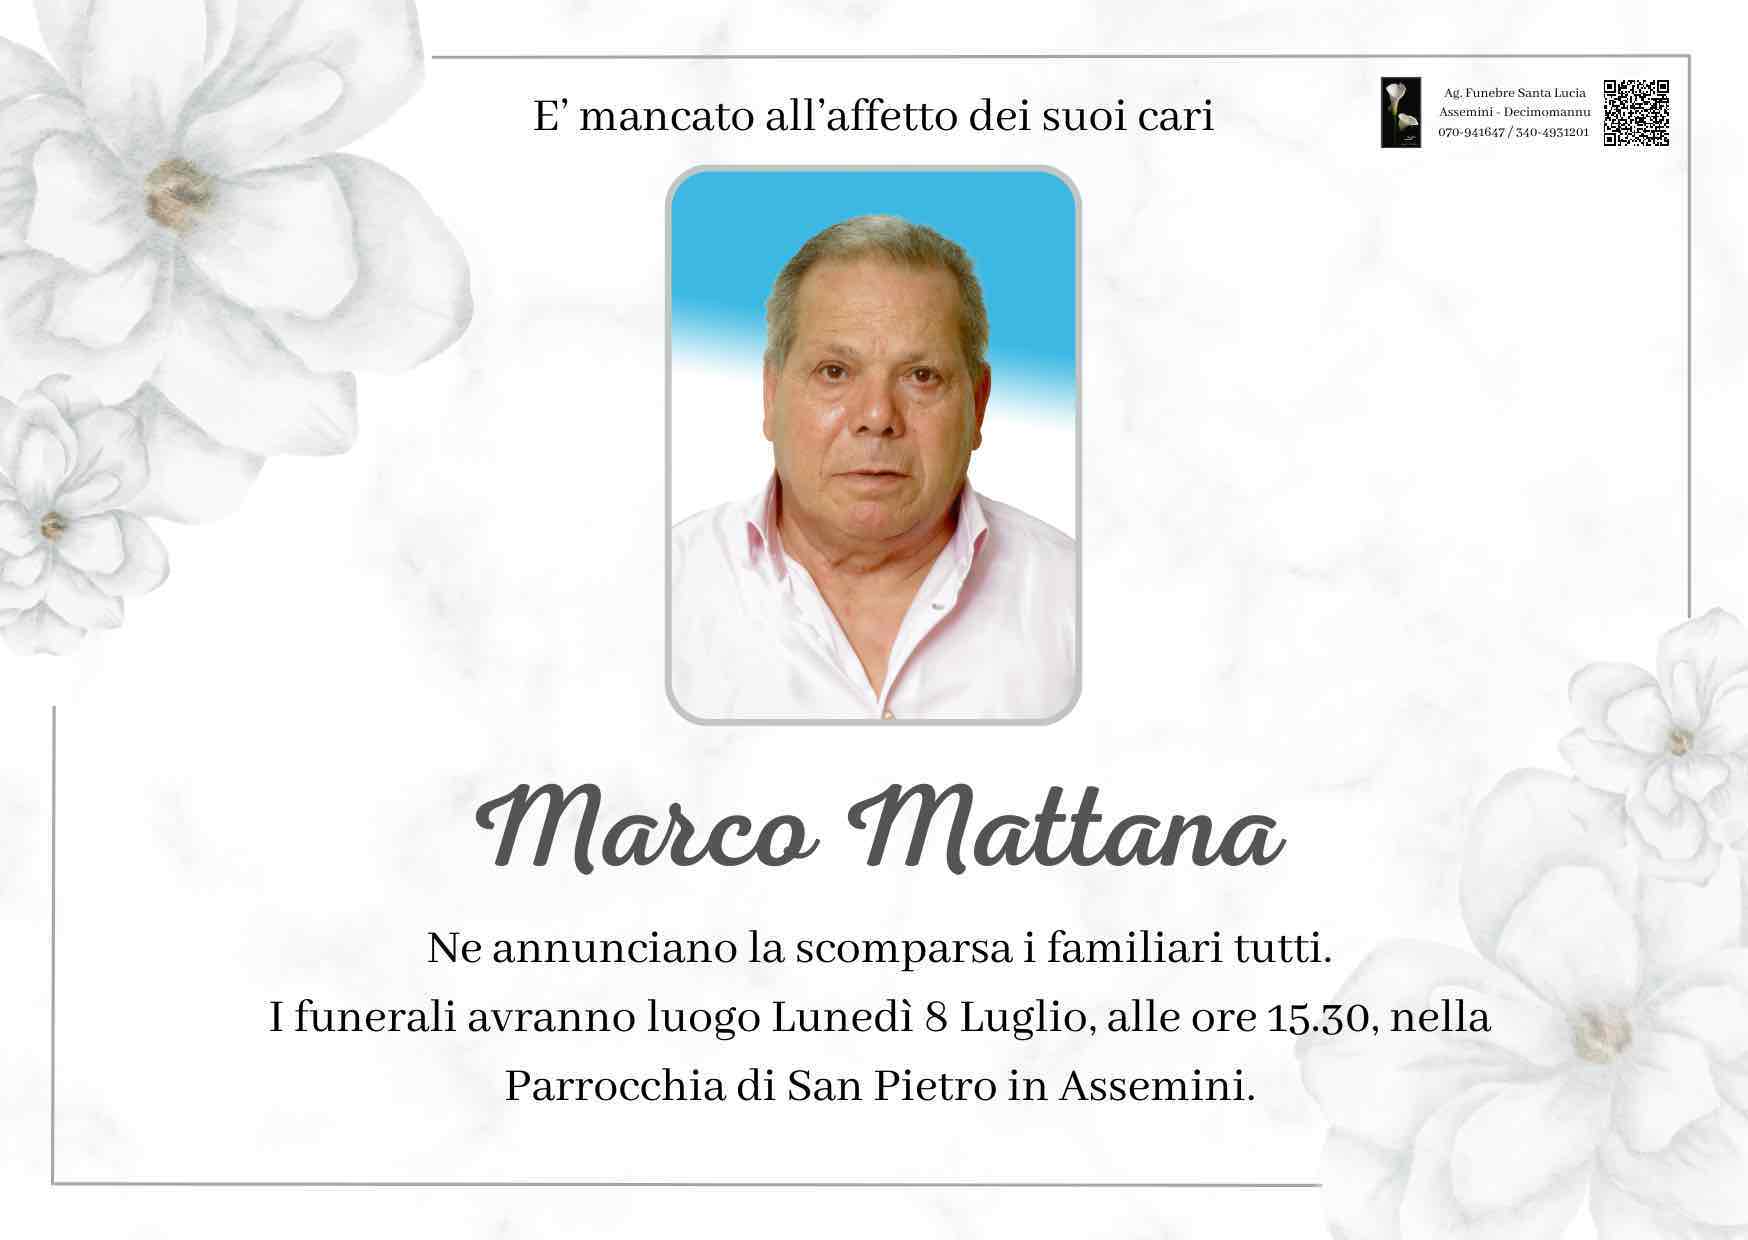 Marco Mattana